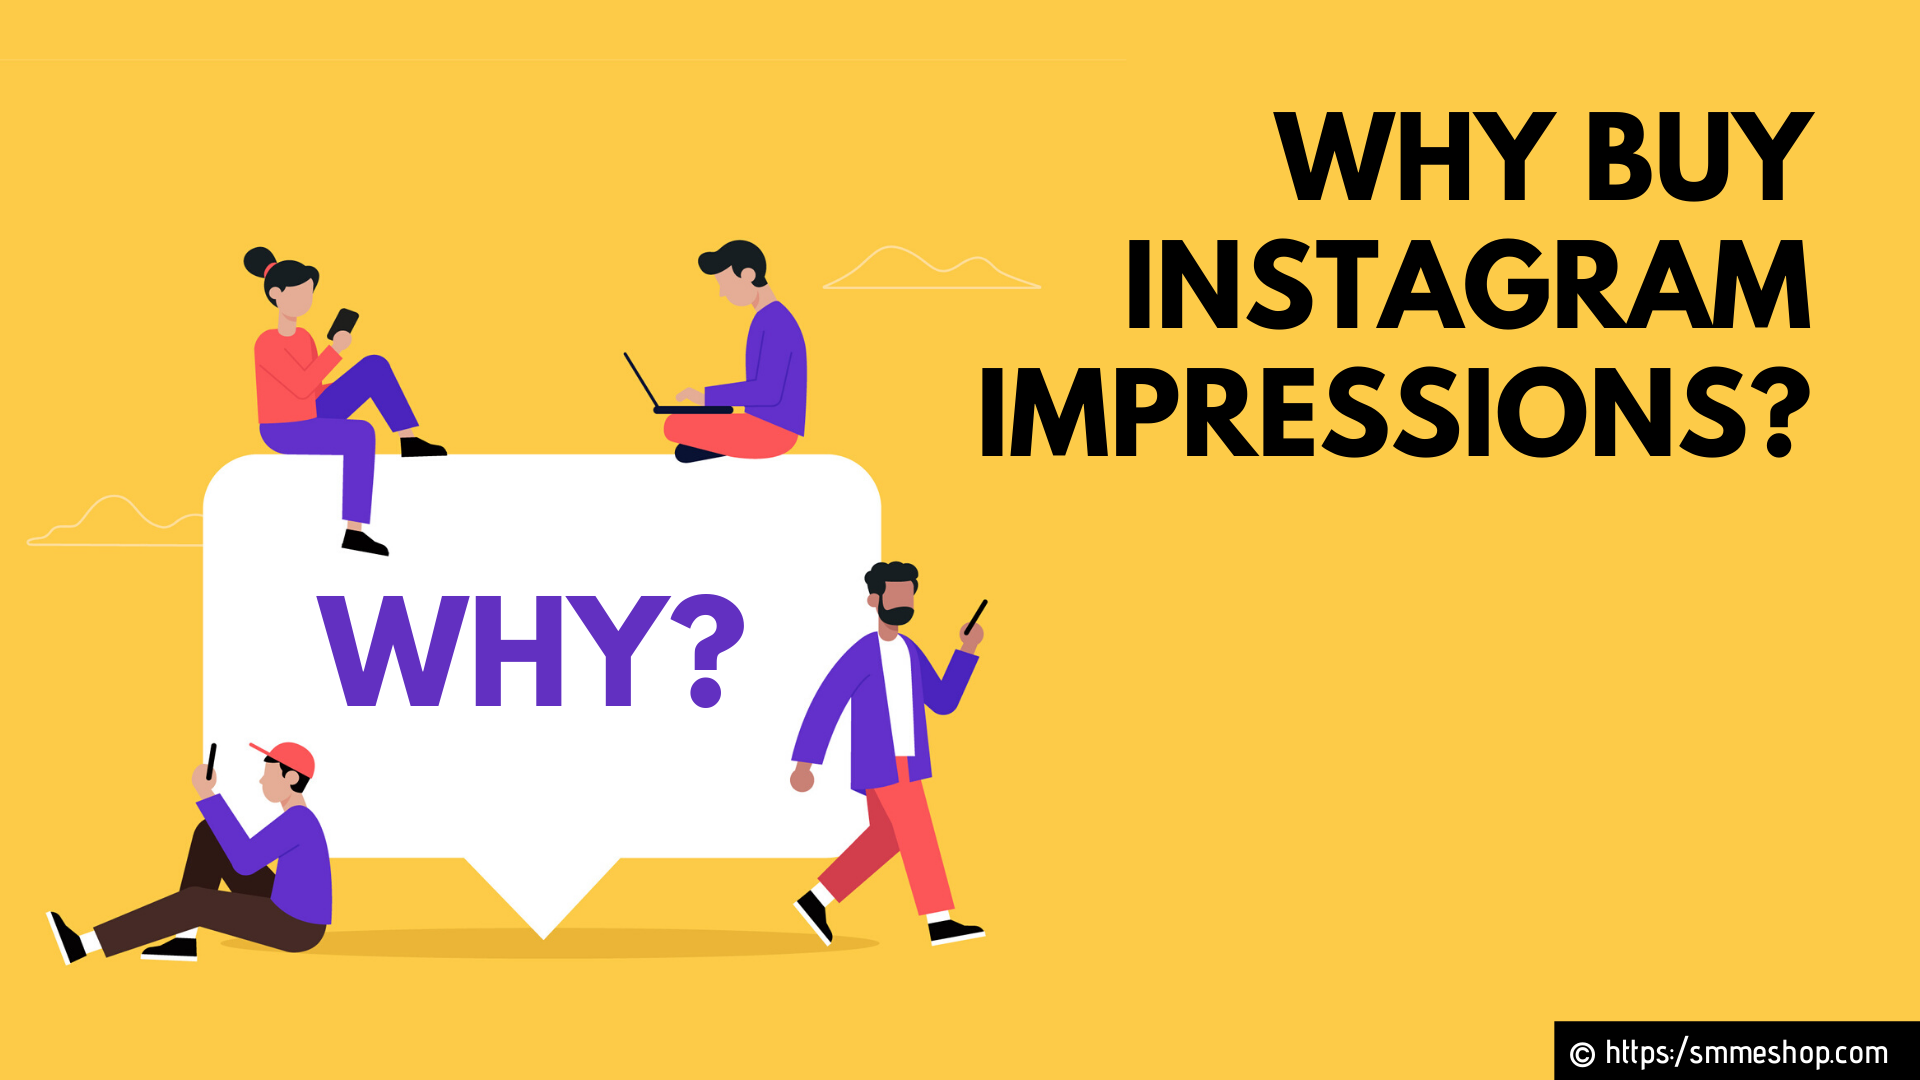 Why Buy Instagram Impressions?